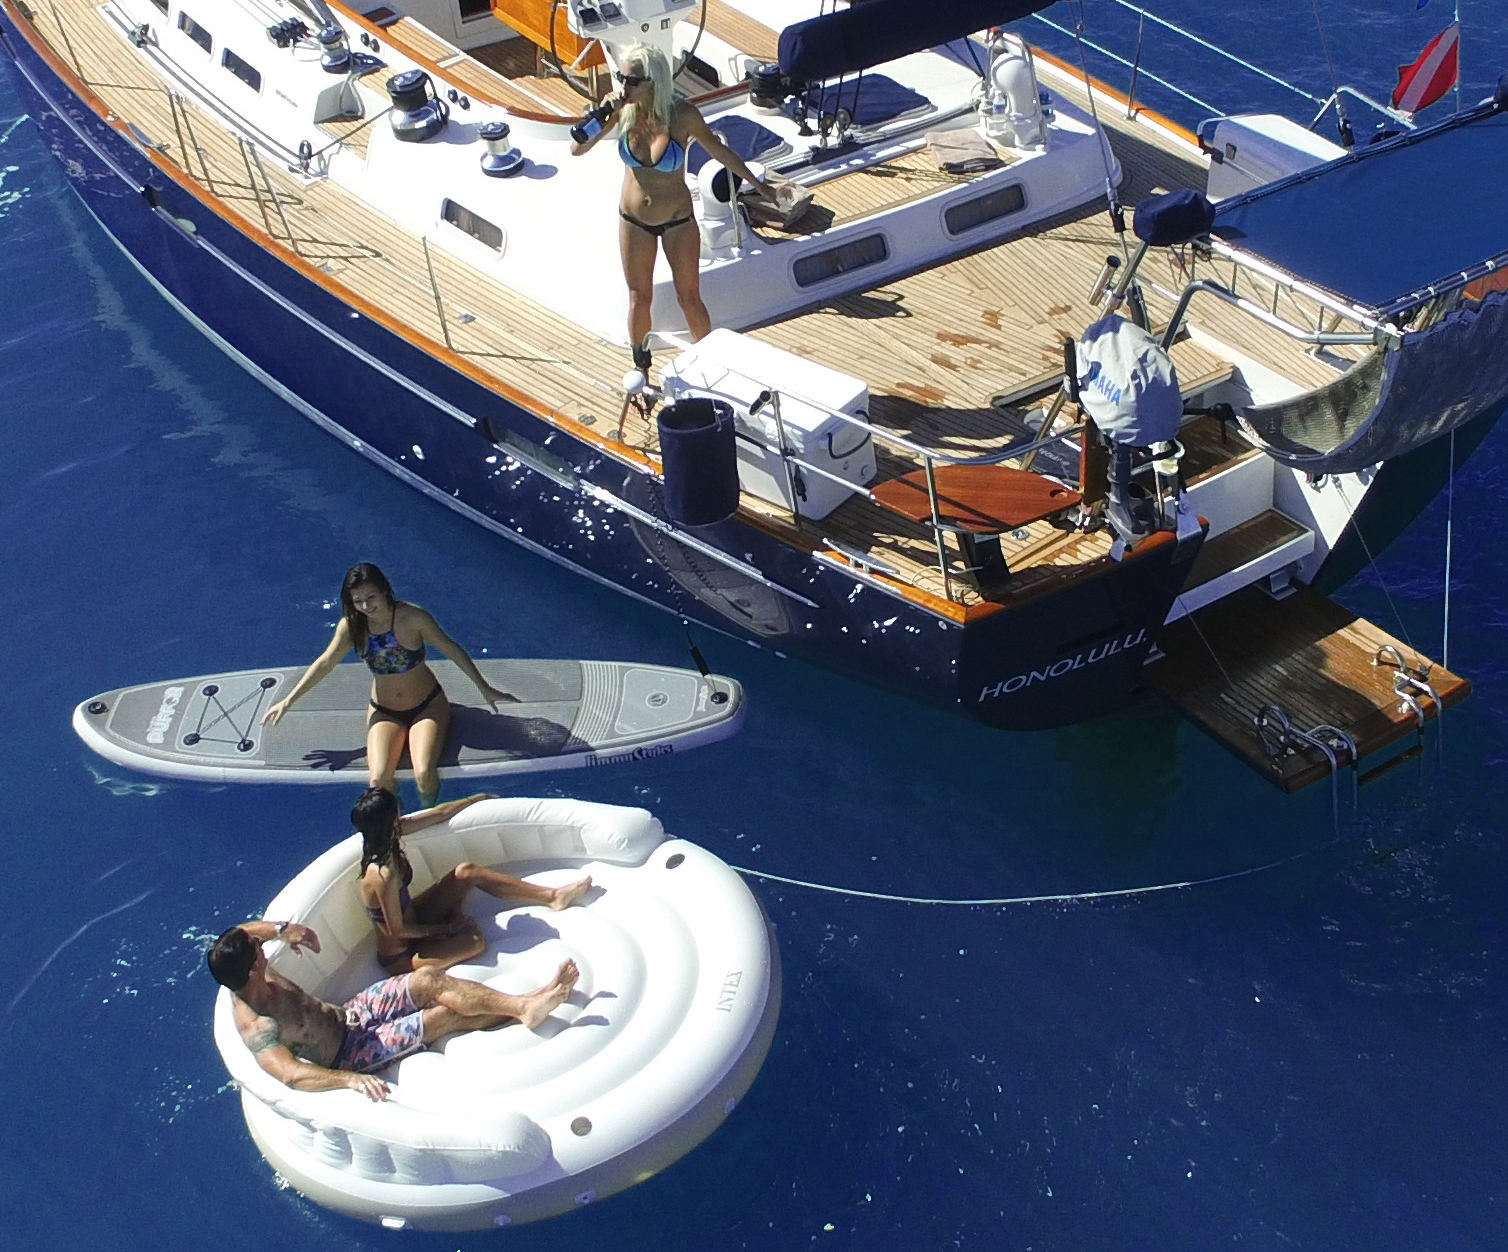  Snorkeling on yacht with SUP and lounge raft off waikiki 